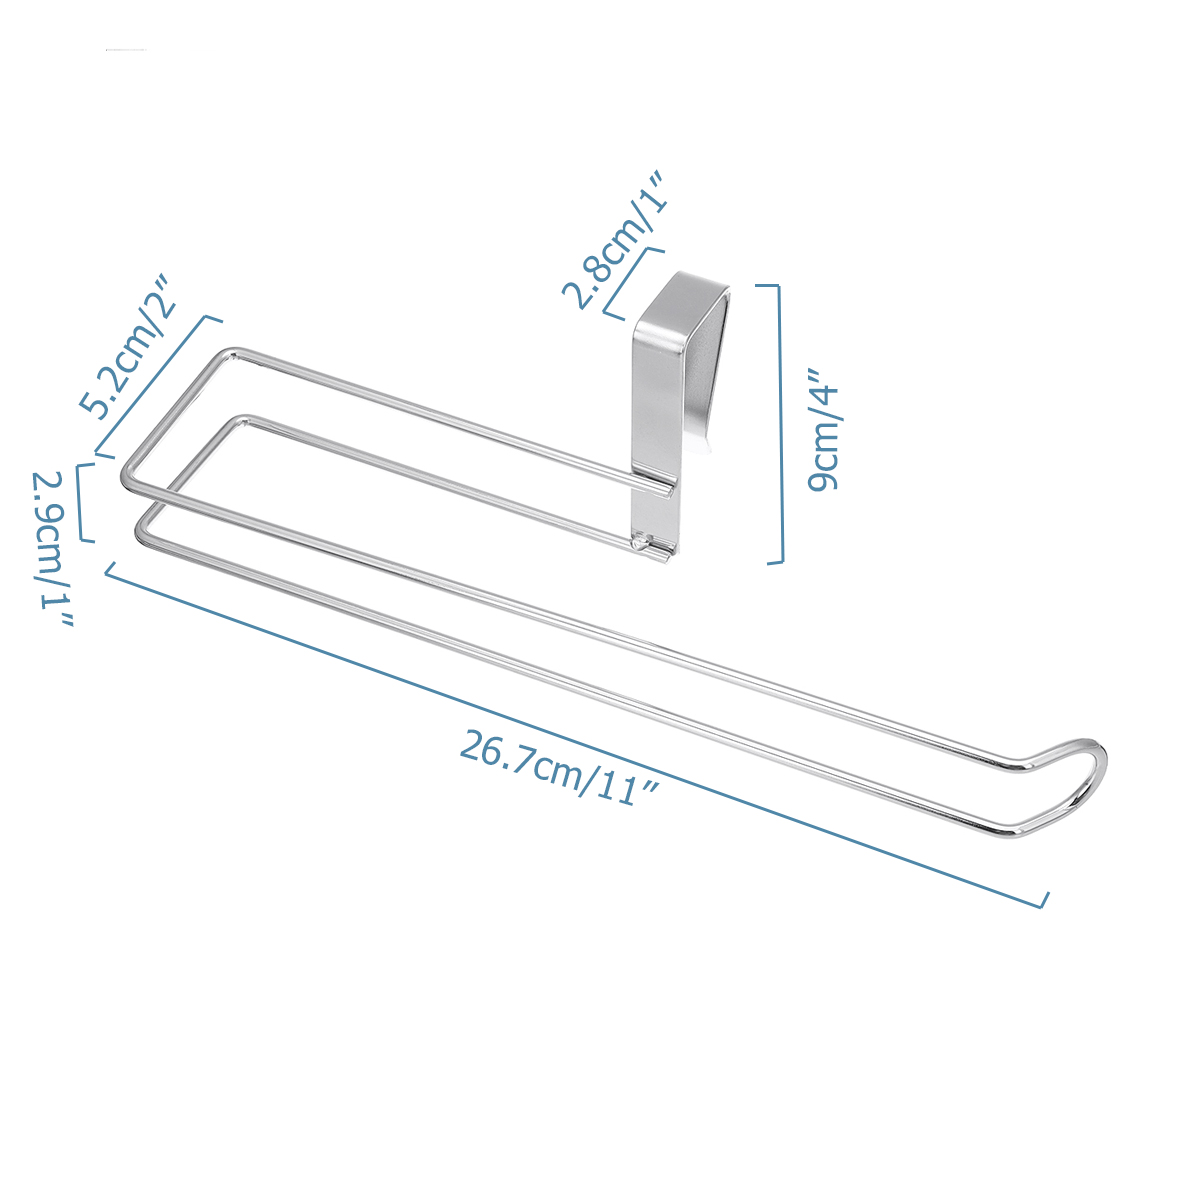 Under-Cabinet-Paper-Roll-Rack-Shelf-Towel-Holder-Stand-Hanger-Organizer-Tool-1723517-6